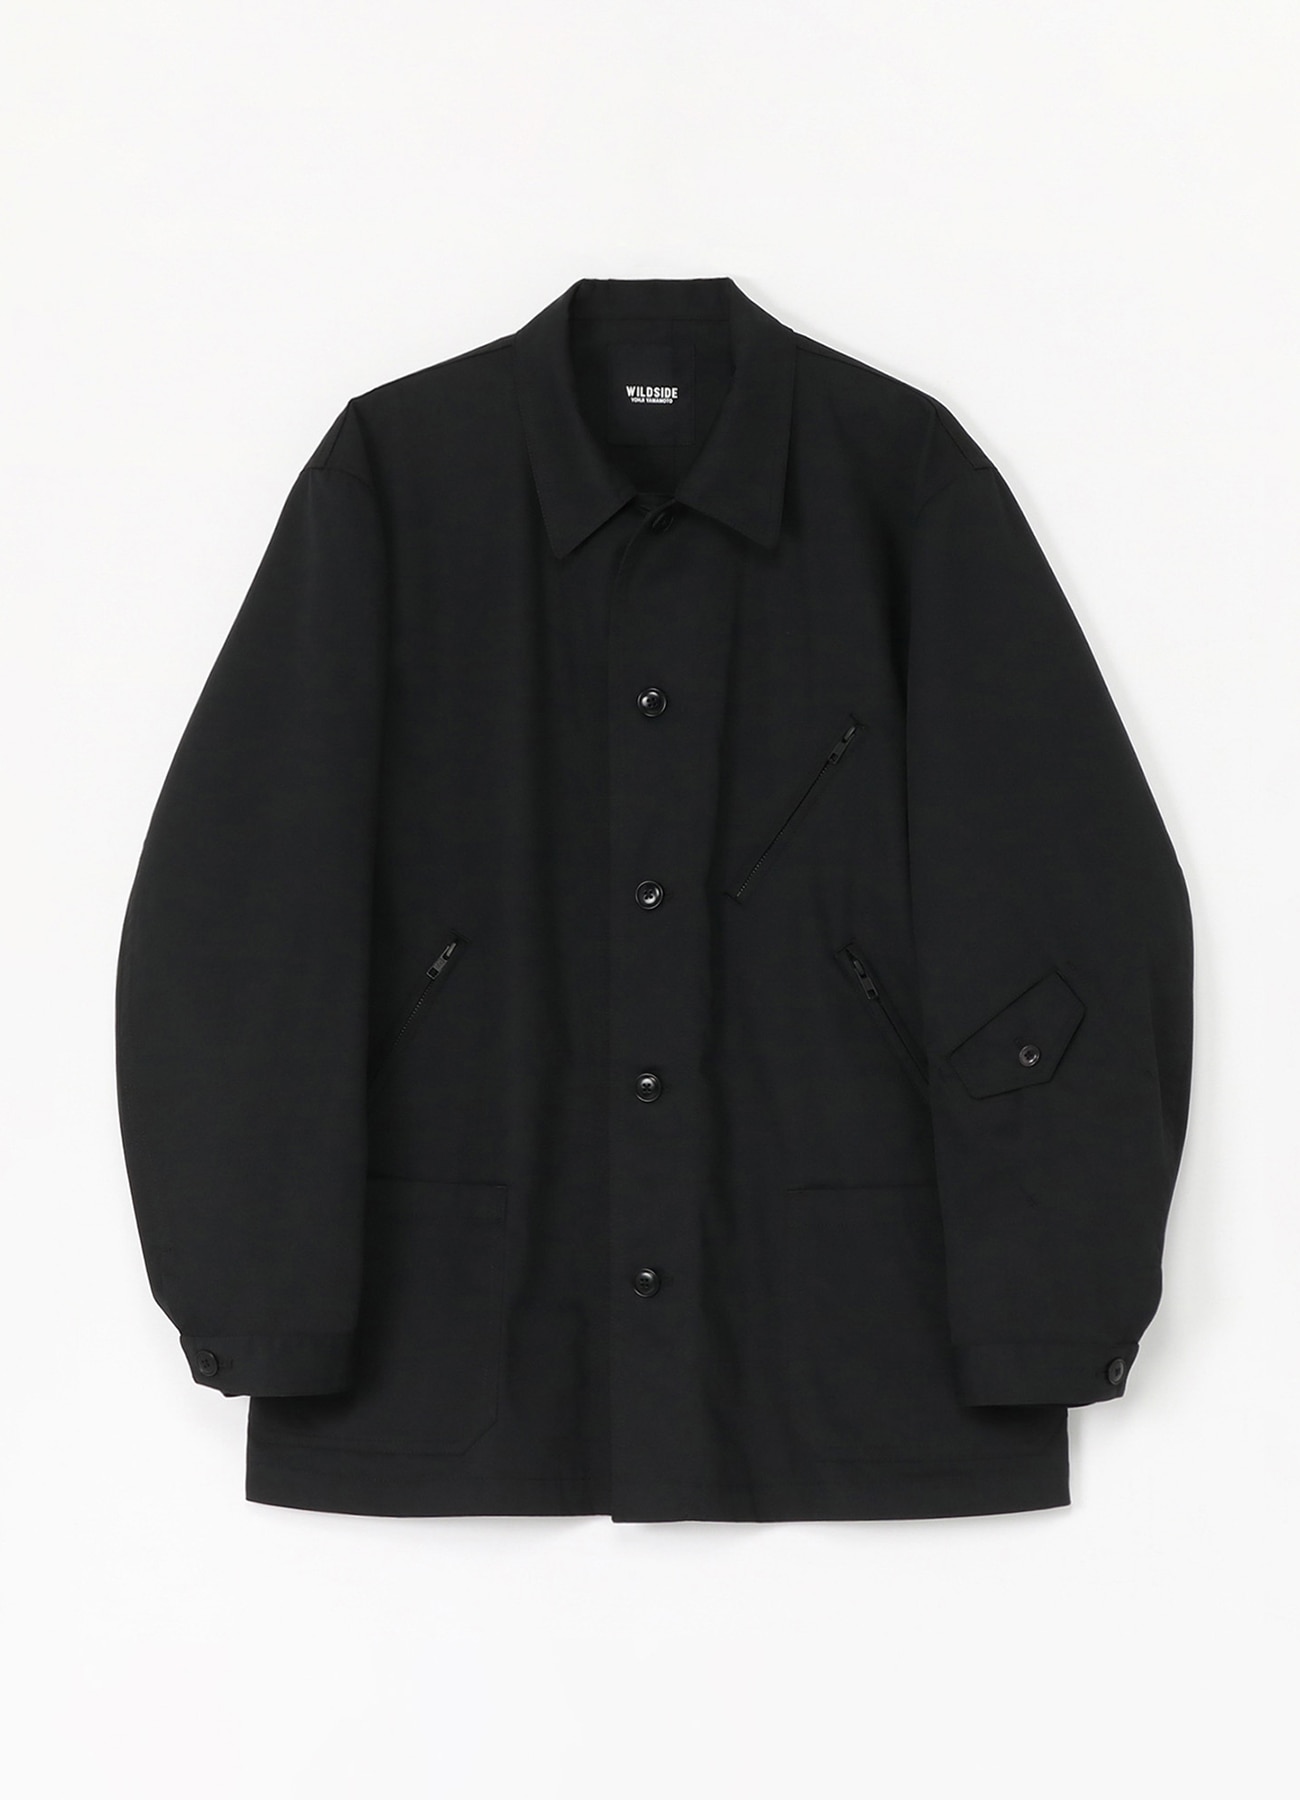 Select from the newest T/C Twill 5B Shirt Jacket WILDSIDE YOHJI